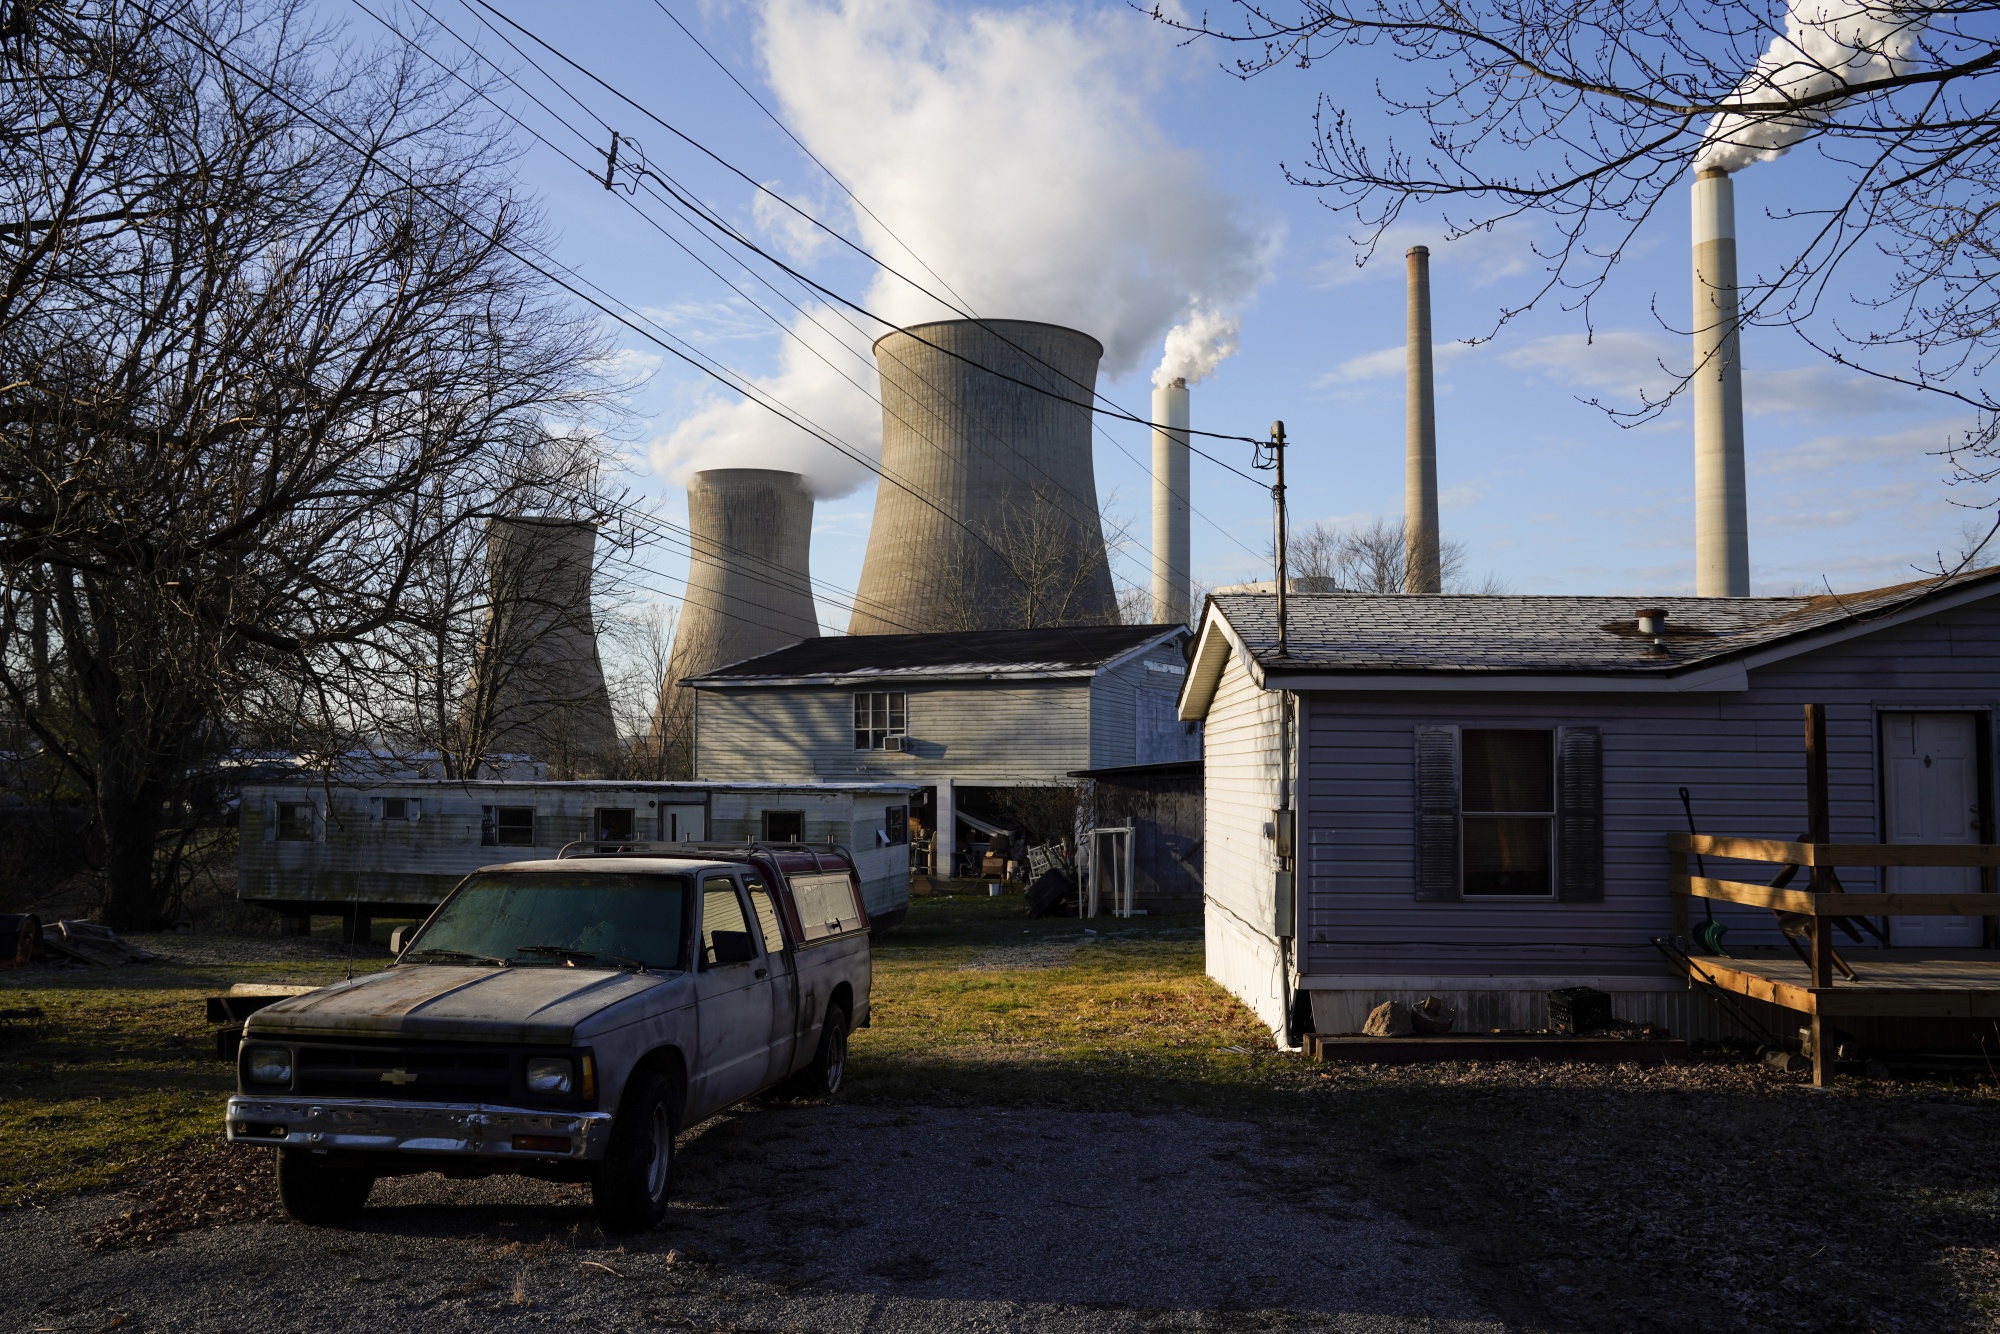 The John E. Amos coal-fired power plant in Poca, West Virginia.